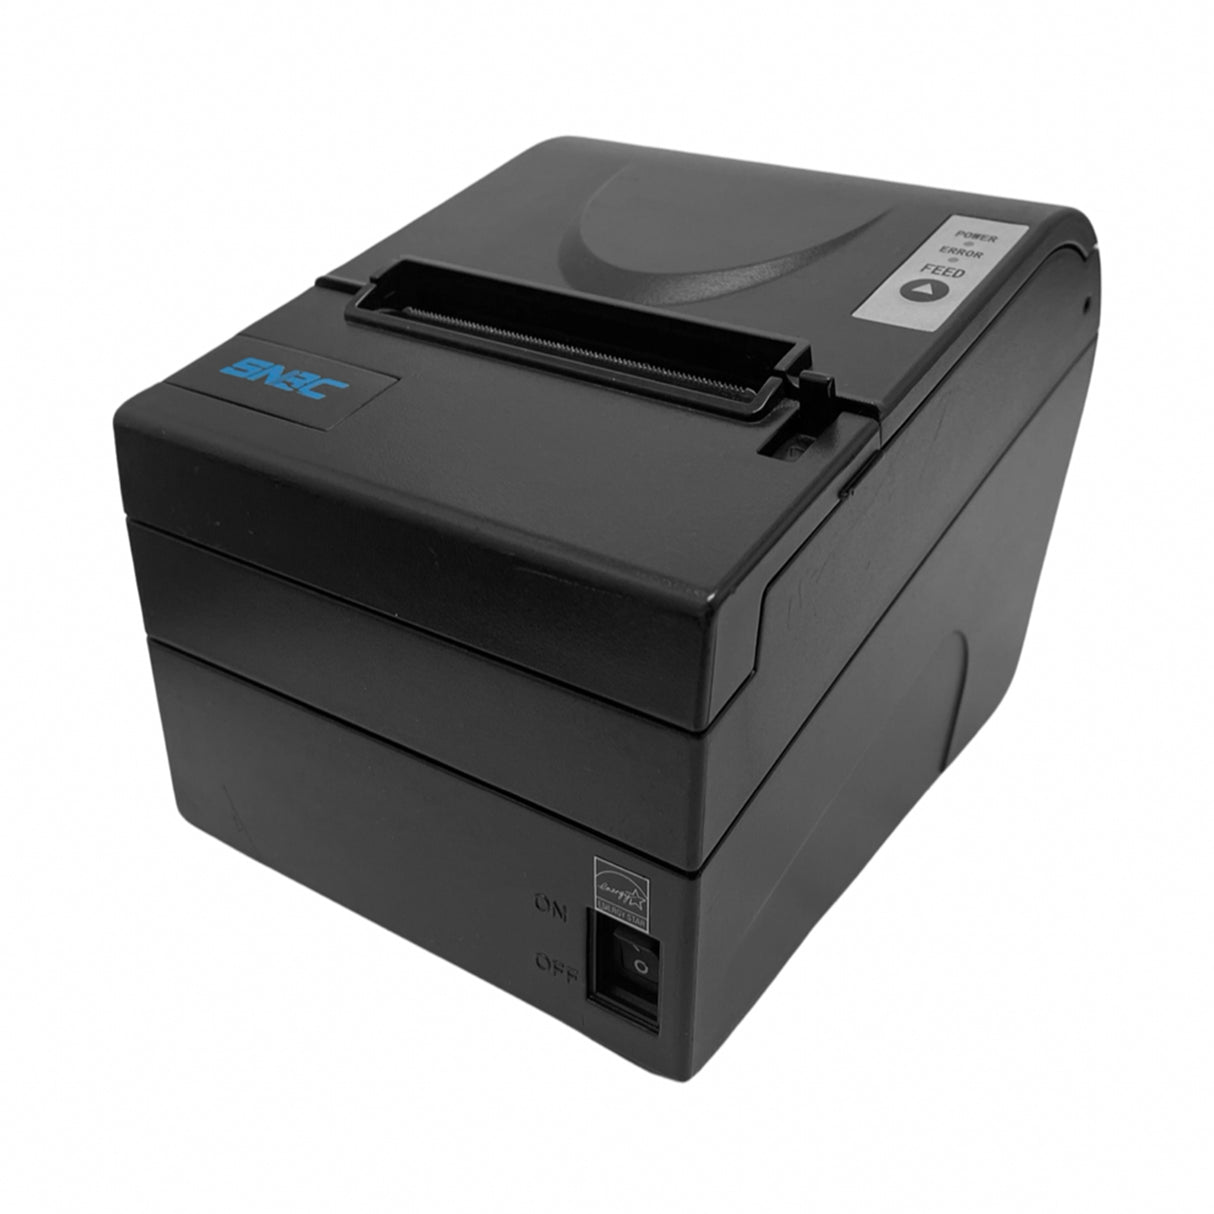 SNBC RP180ii Receipt Printer